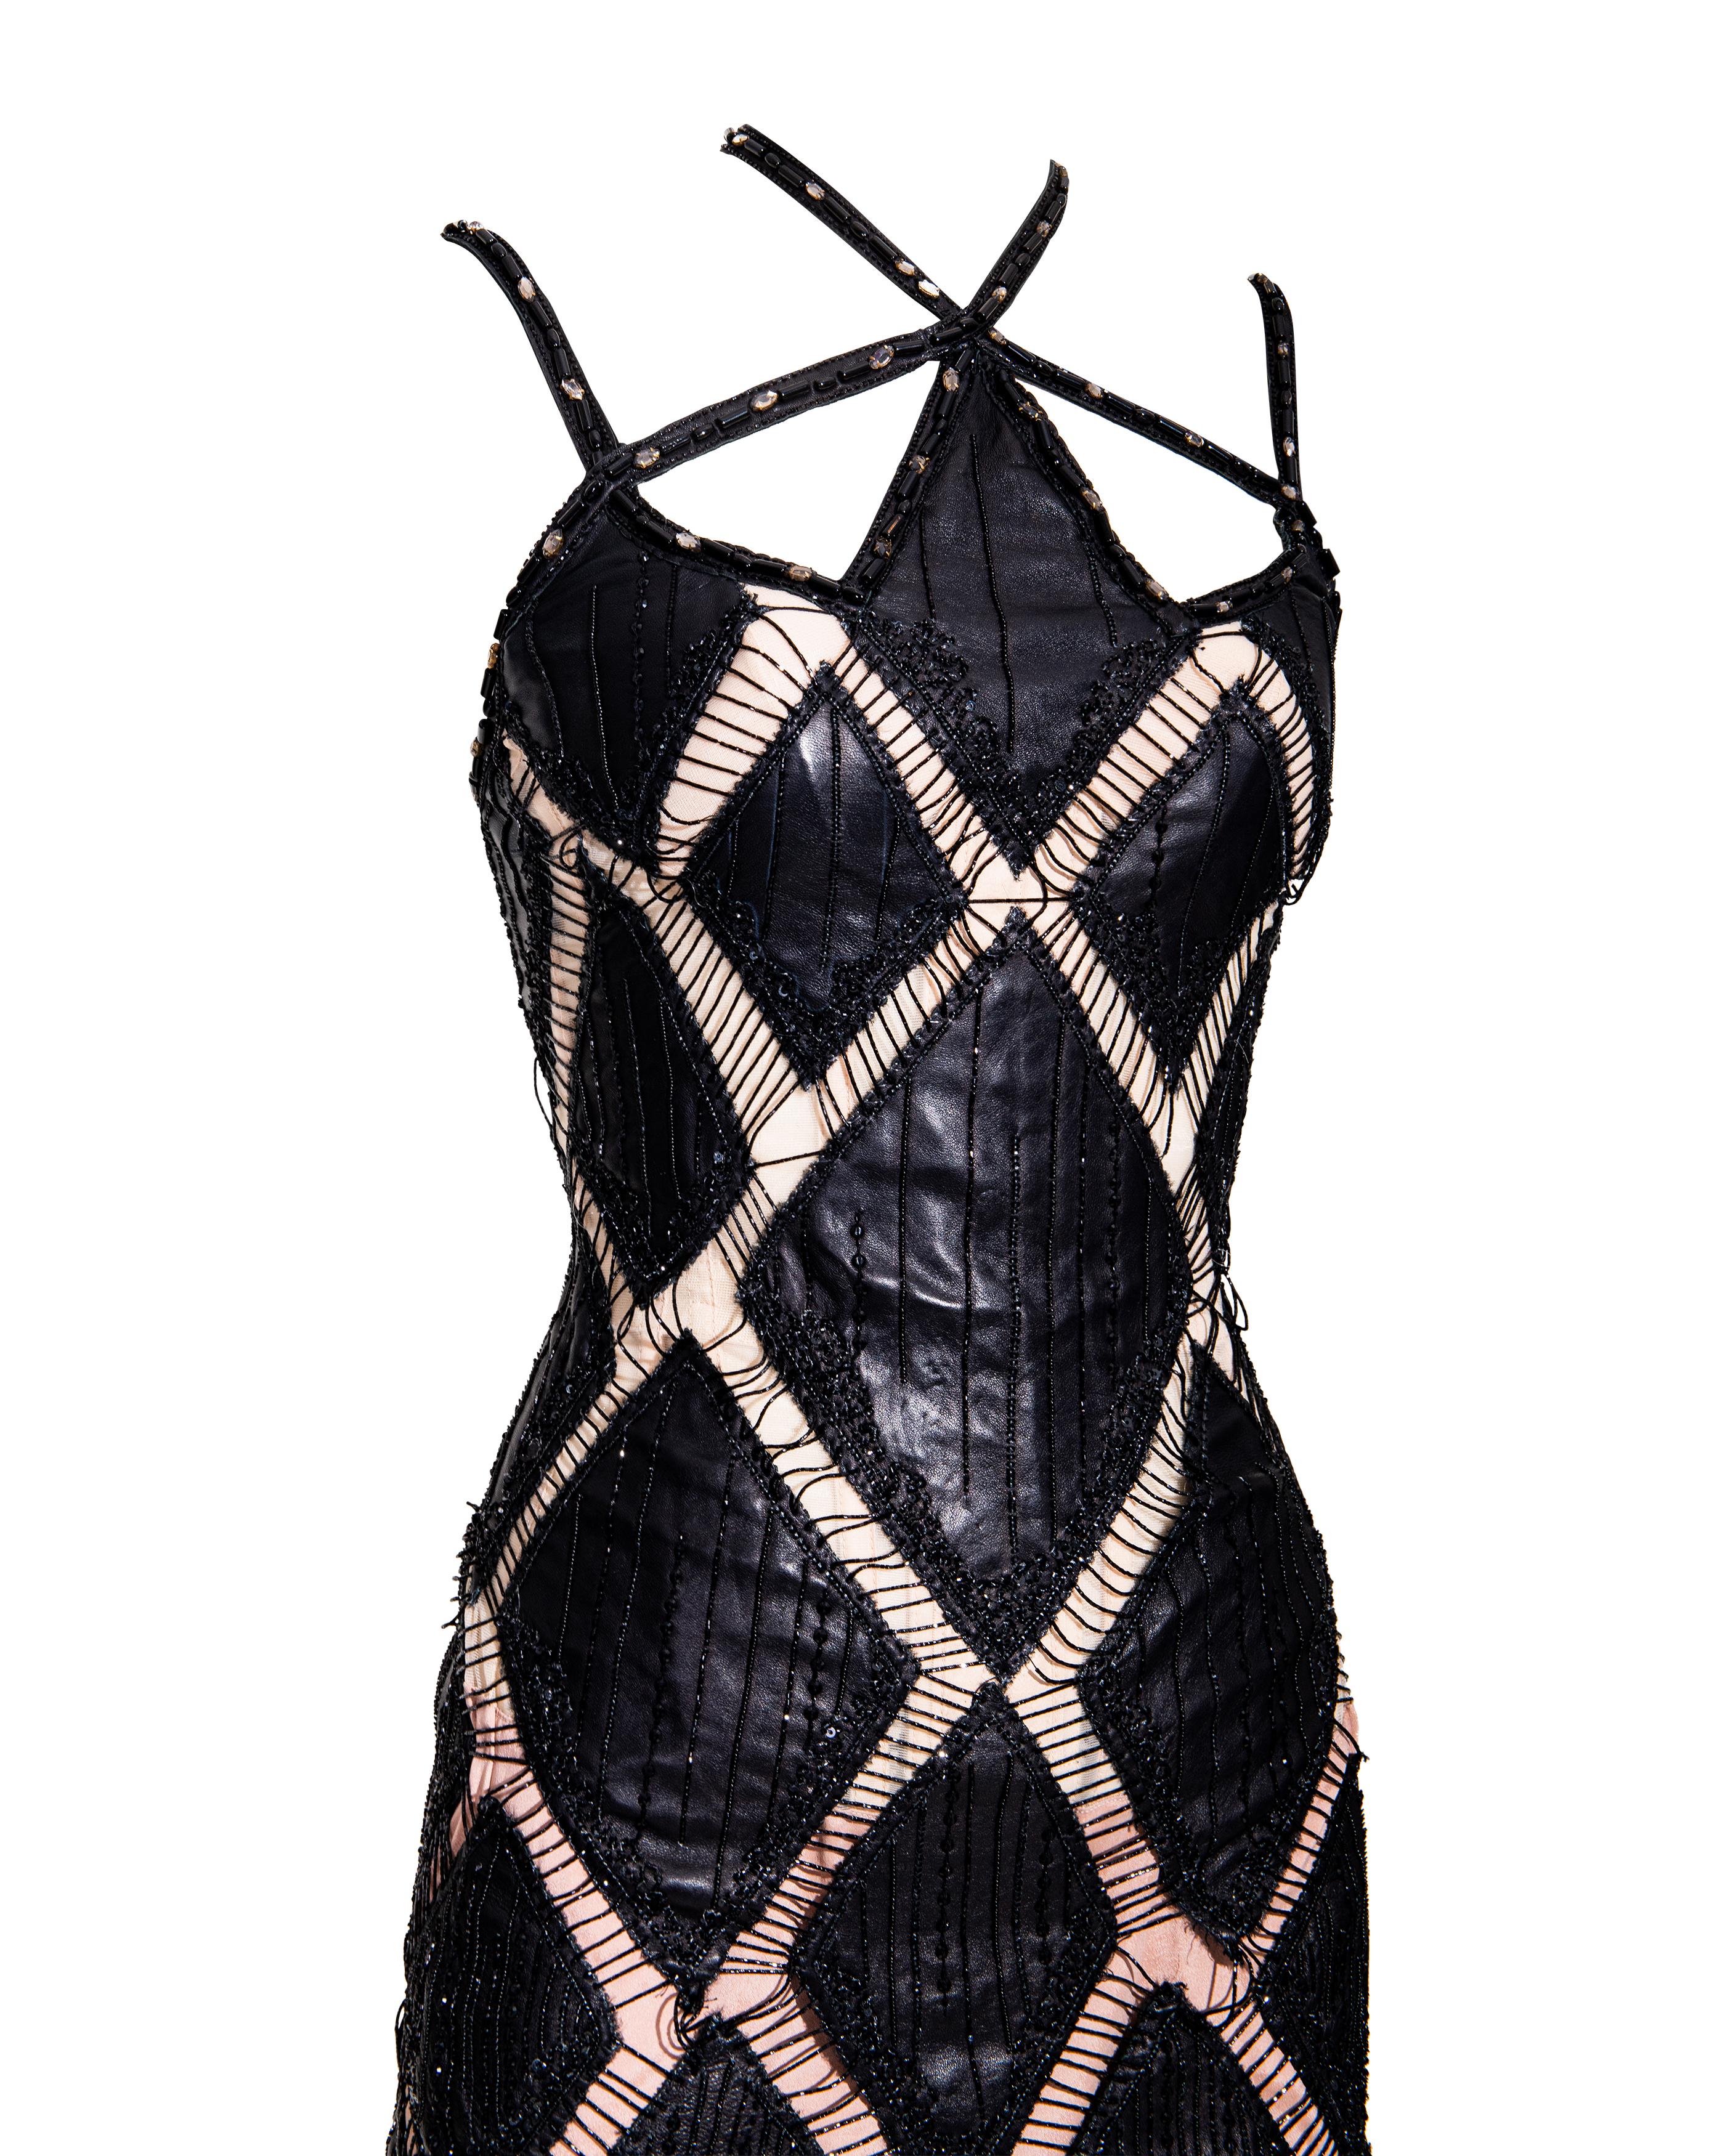 S/S 2004 Roberto Cavalli Geometric Black Embellished Leather Corset Fringe Dress For Sale 3